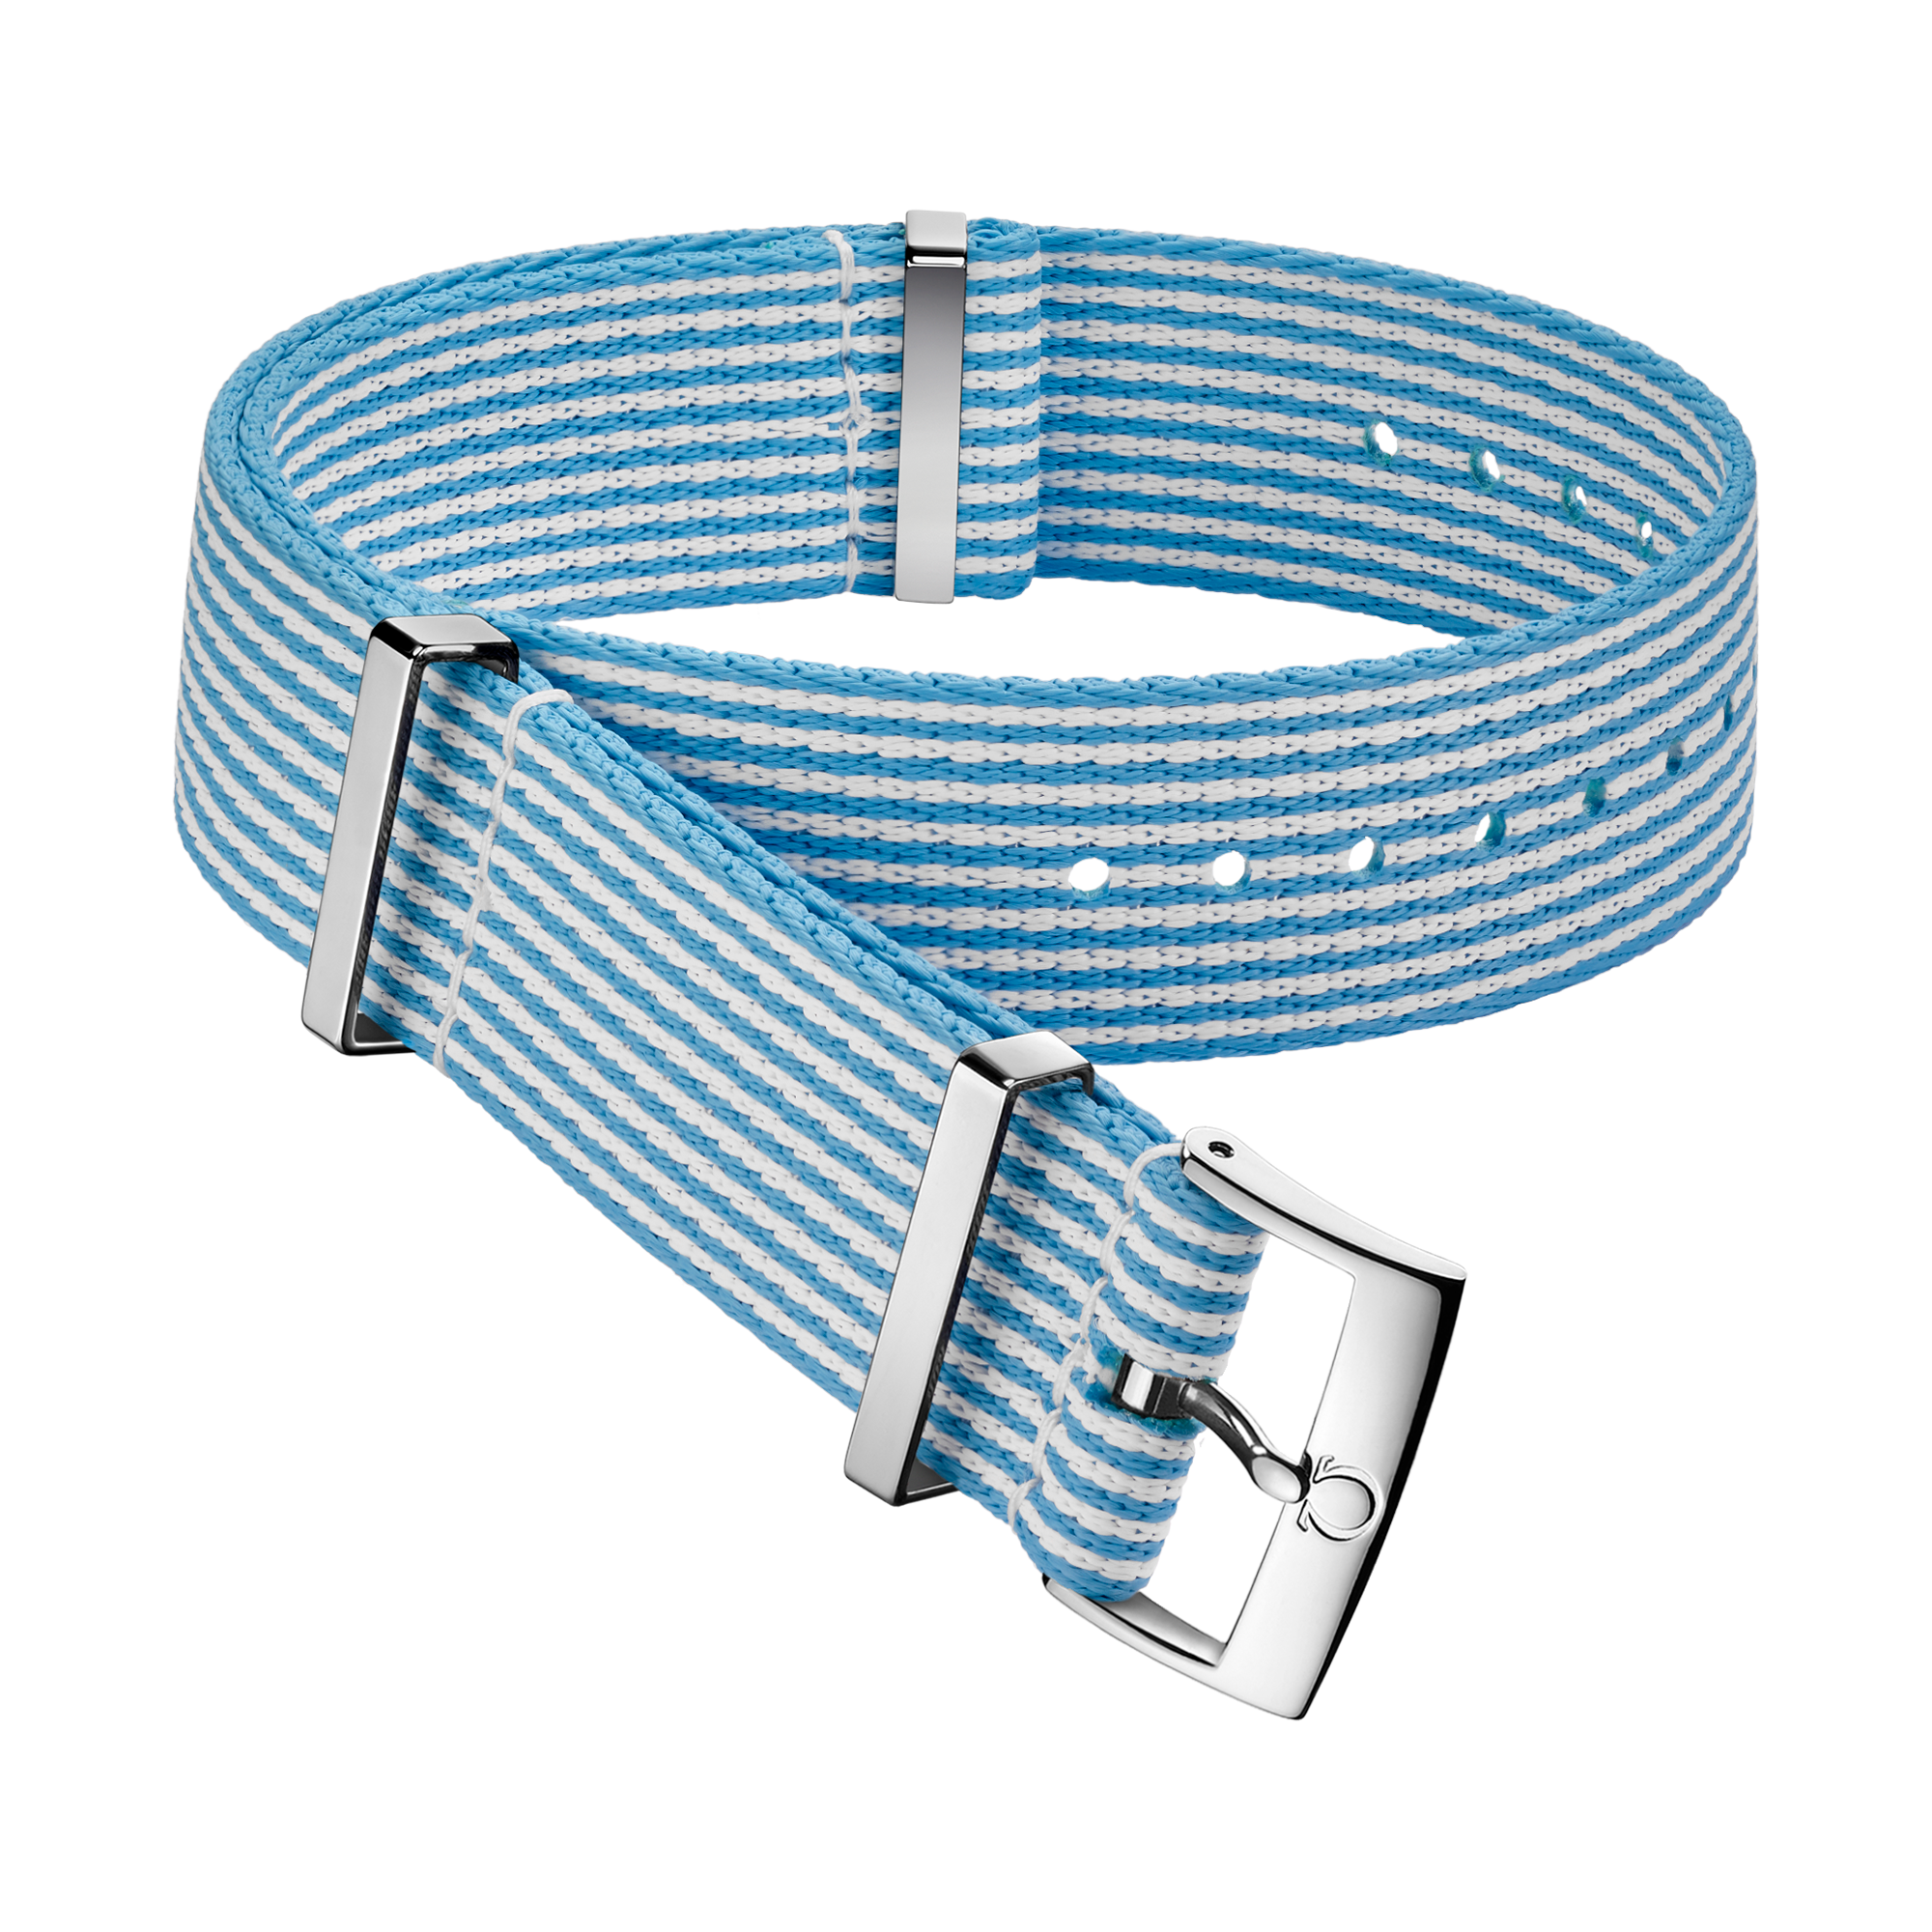 NATO strap - Polyamide striped blue and white strap - 031CWZ010682